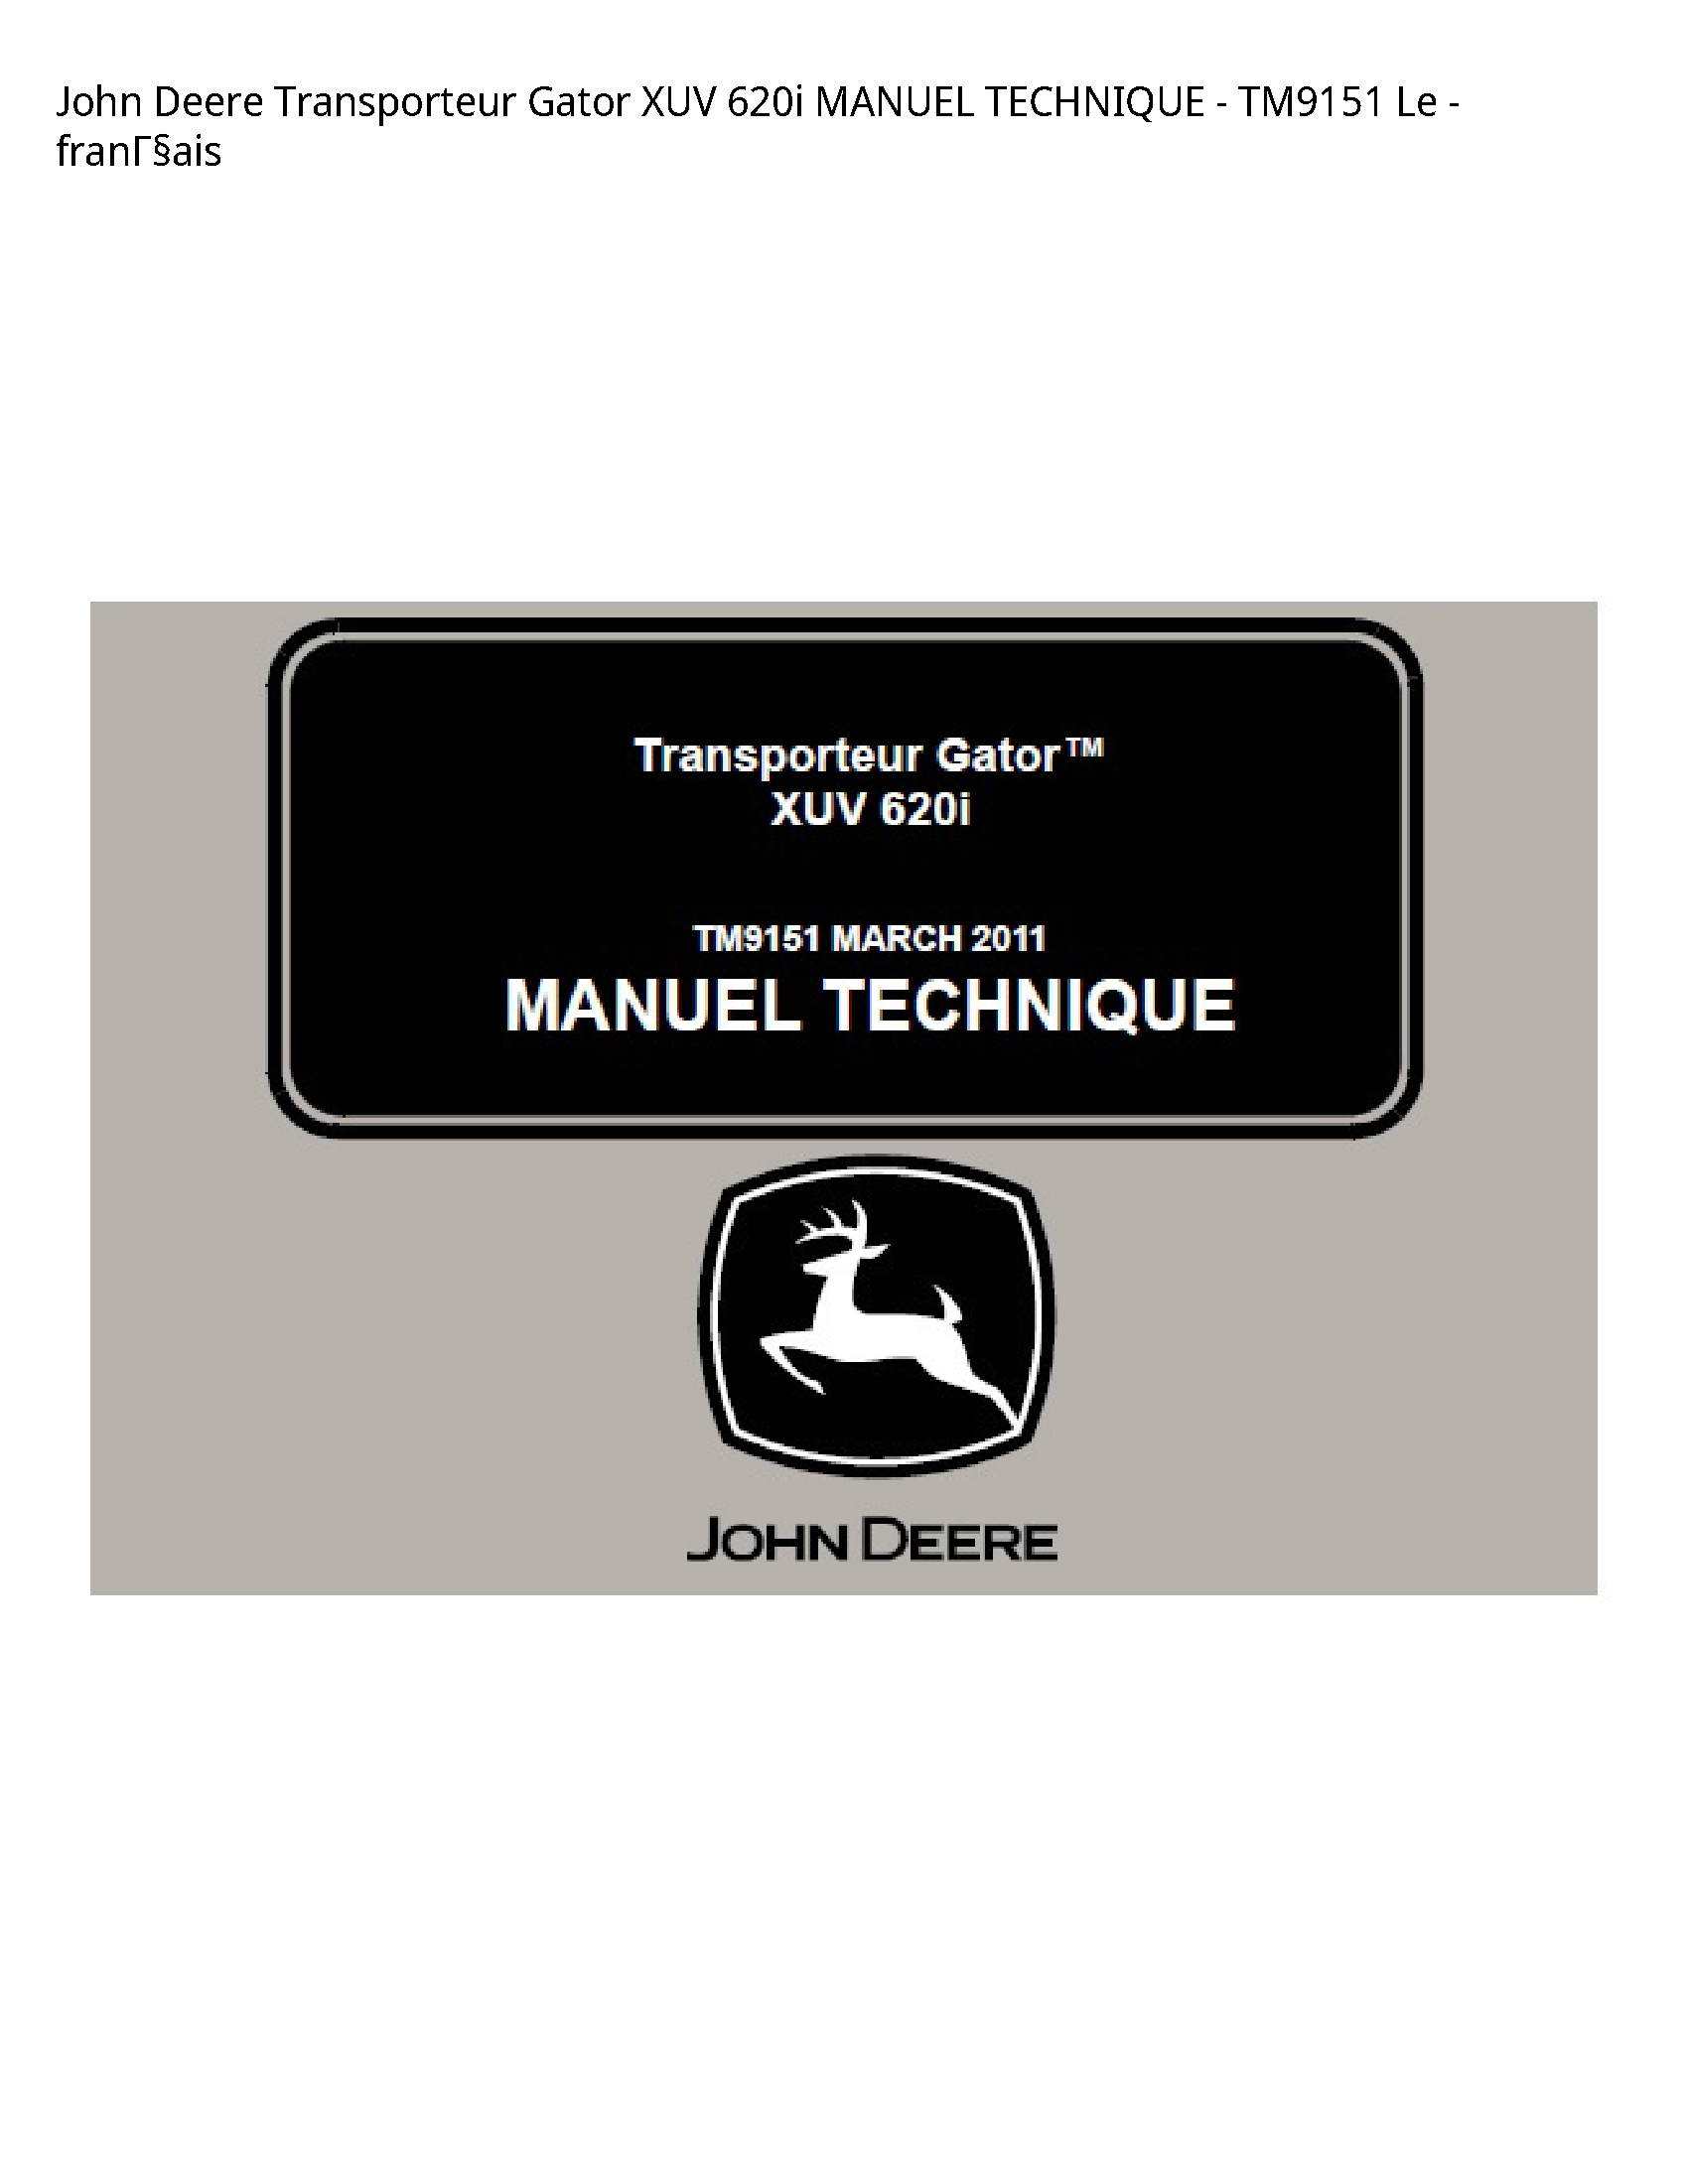 John Deere 620i Transporteur Gator XUV MANUEL TECHNIQUE Le franГ§ais manual